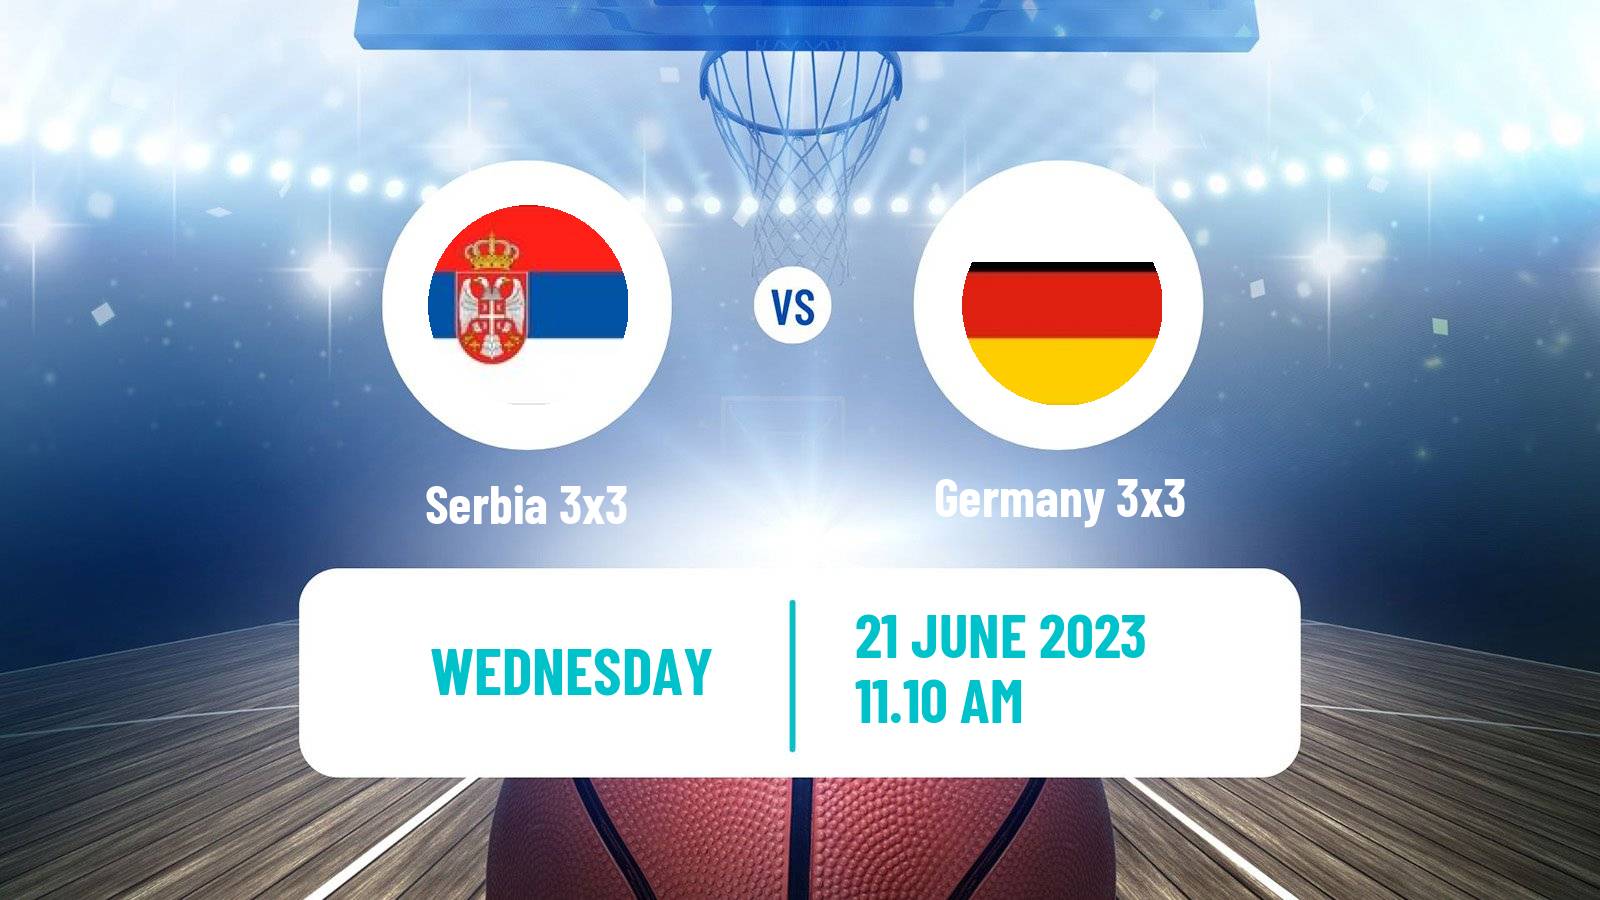 Basketball European Games 3x3  Serbia 3x3 - Germany 3x3